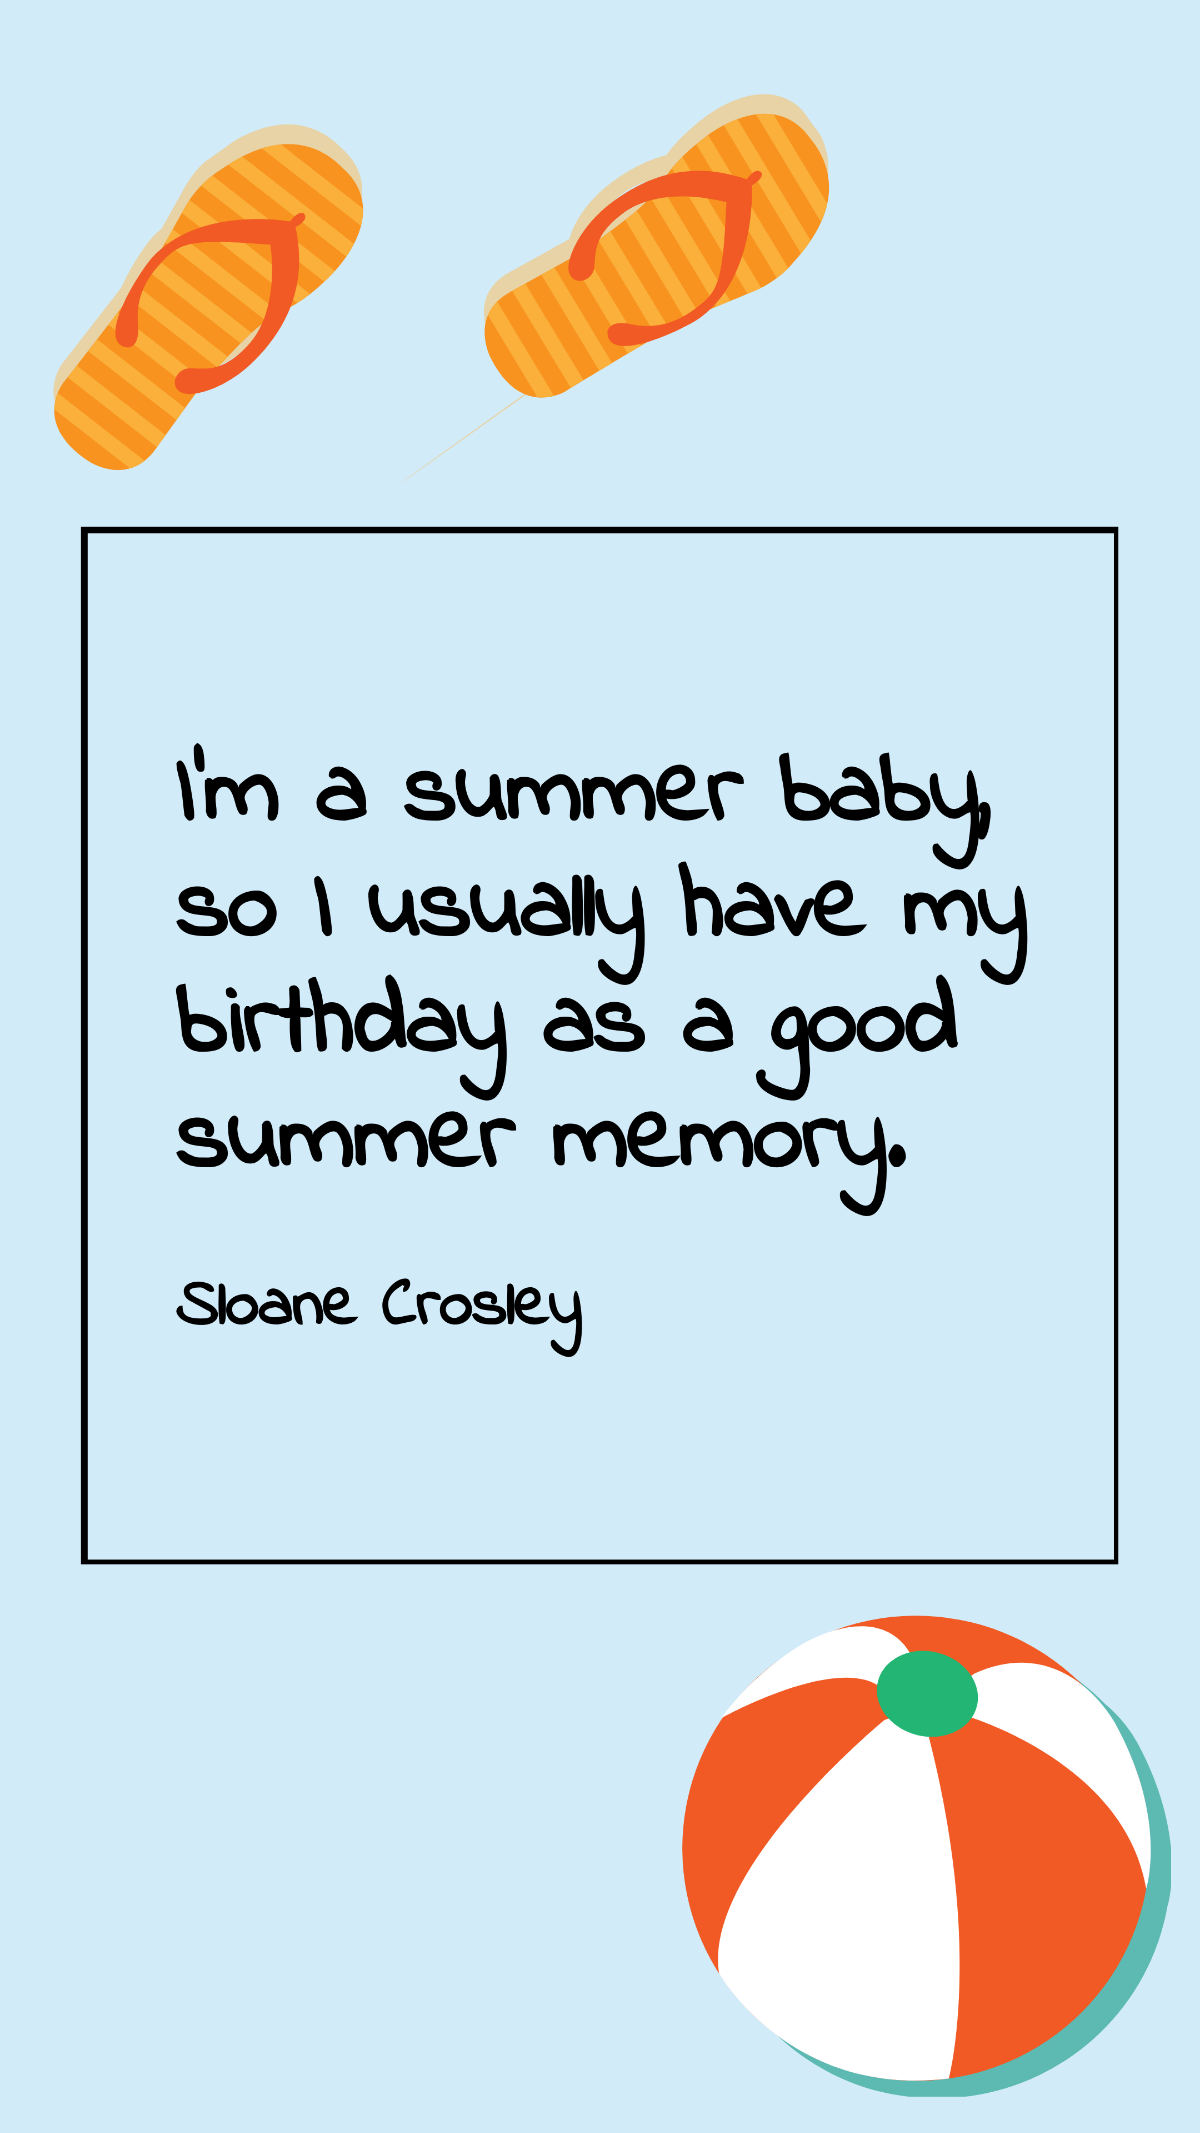 Sloane Crosley - I'm a summer baby, so I usually have my birthday as a good summer memory.